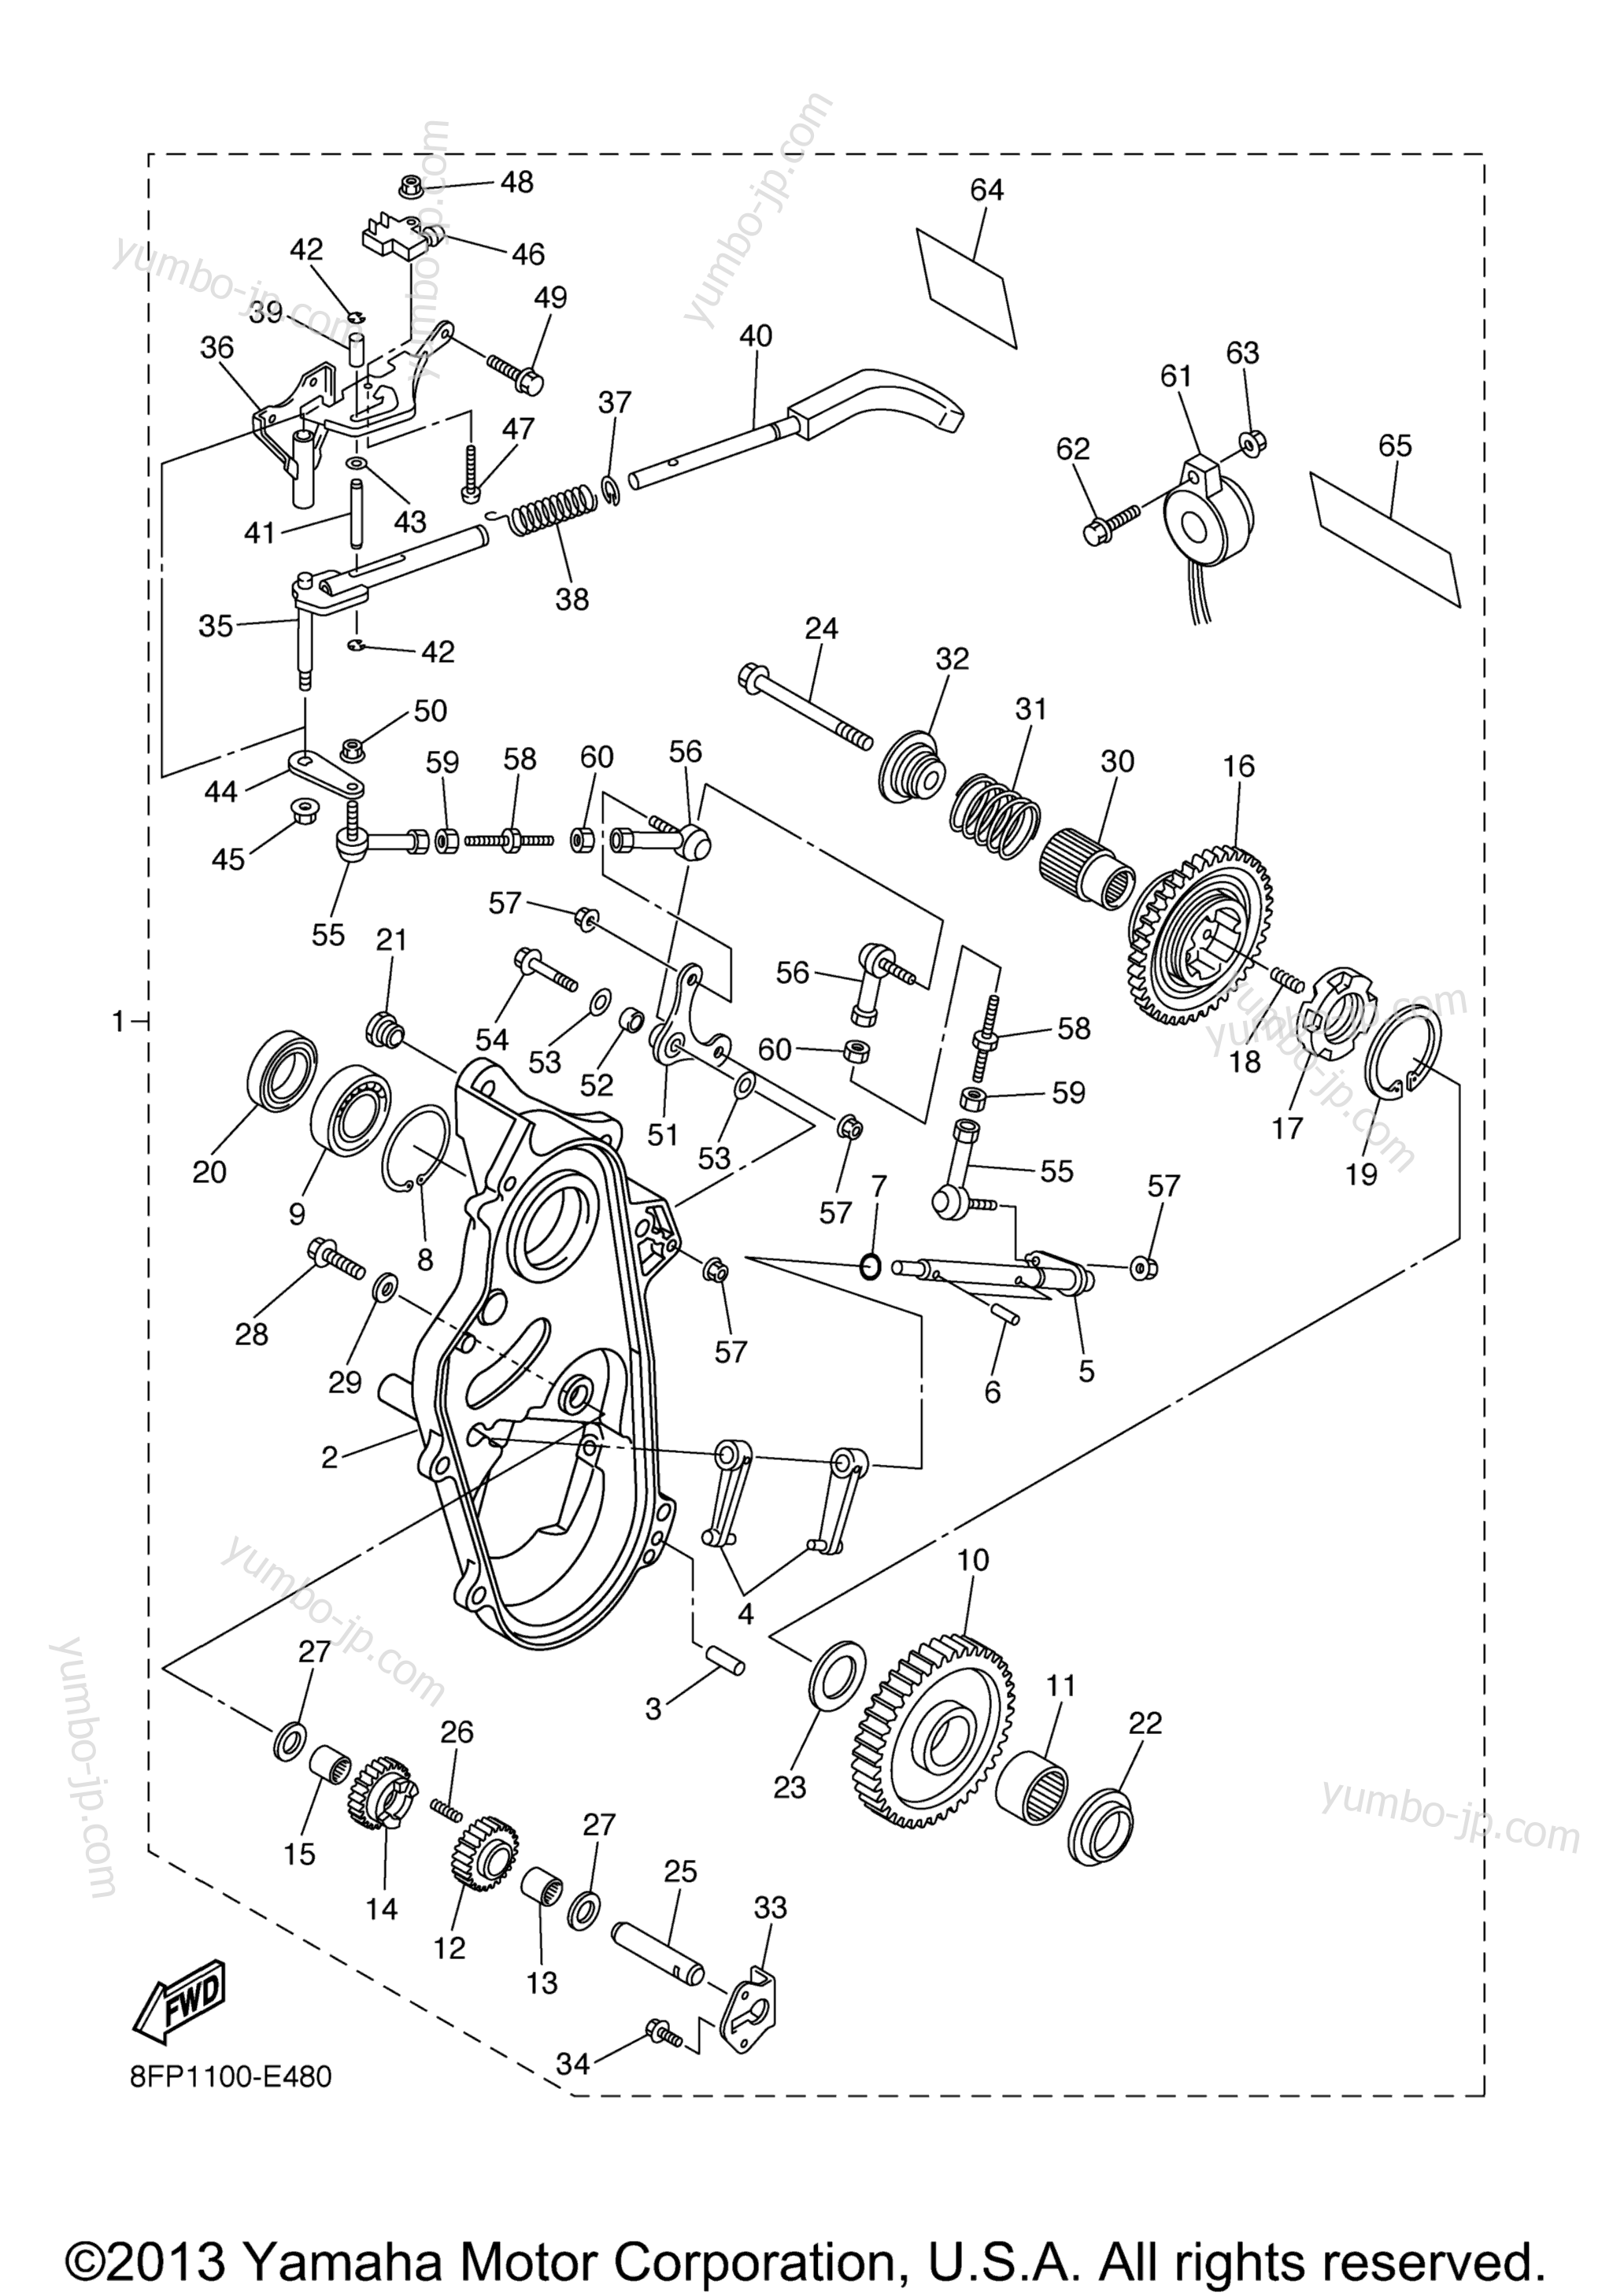 Alternate Reverse Gear Kit for snowmobiles YAMAHA APEX MOUNTAIN (RX10ML) 2006 year